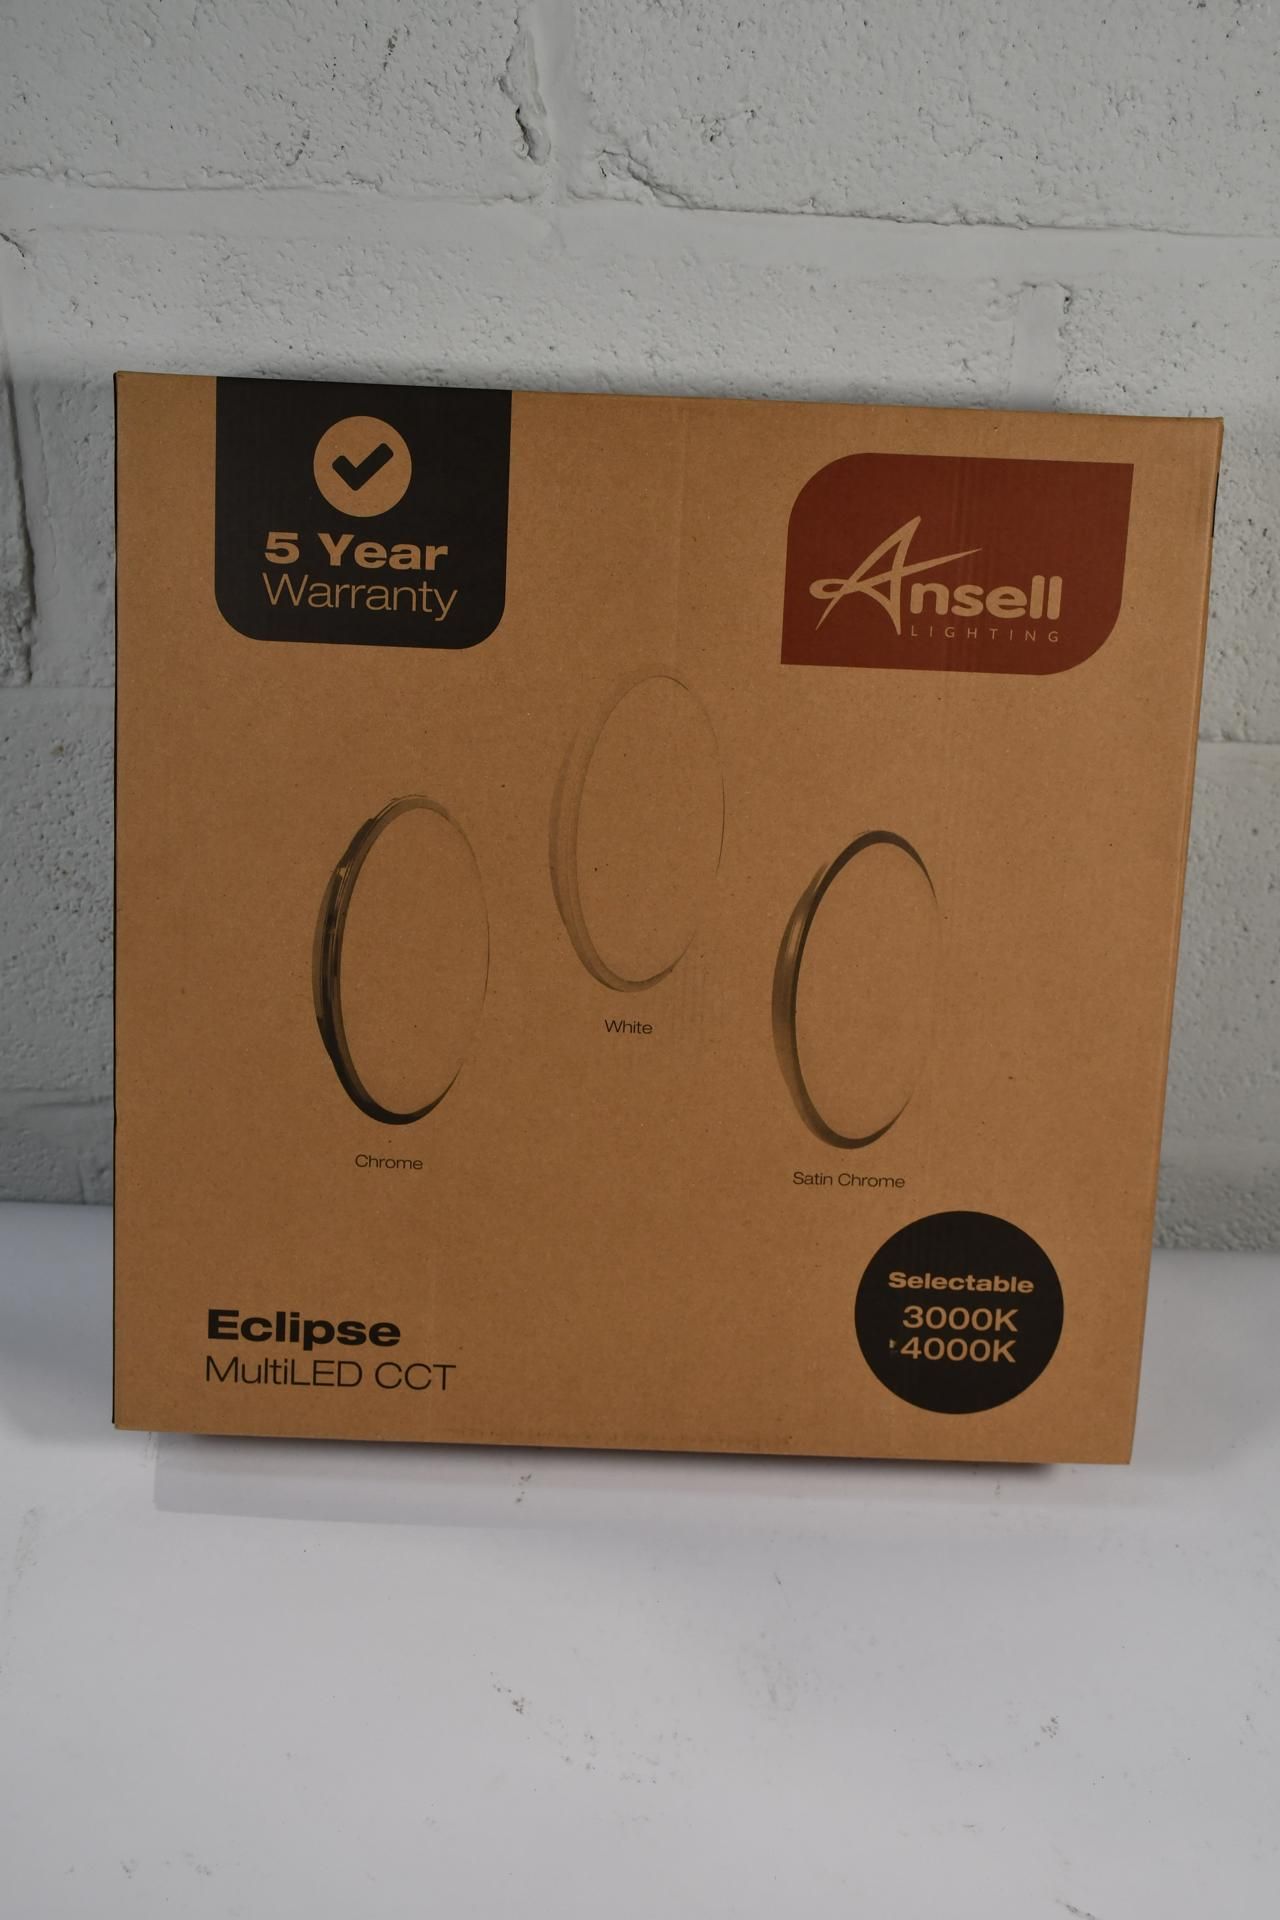 Ansell Eclipse Multi LED CCT Lighting.